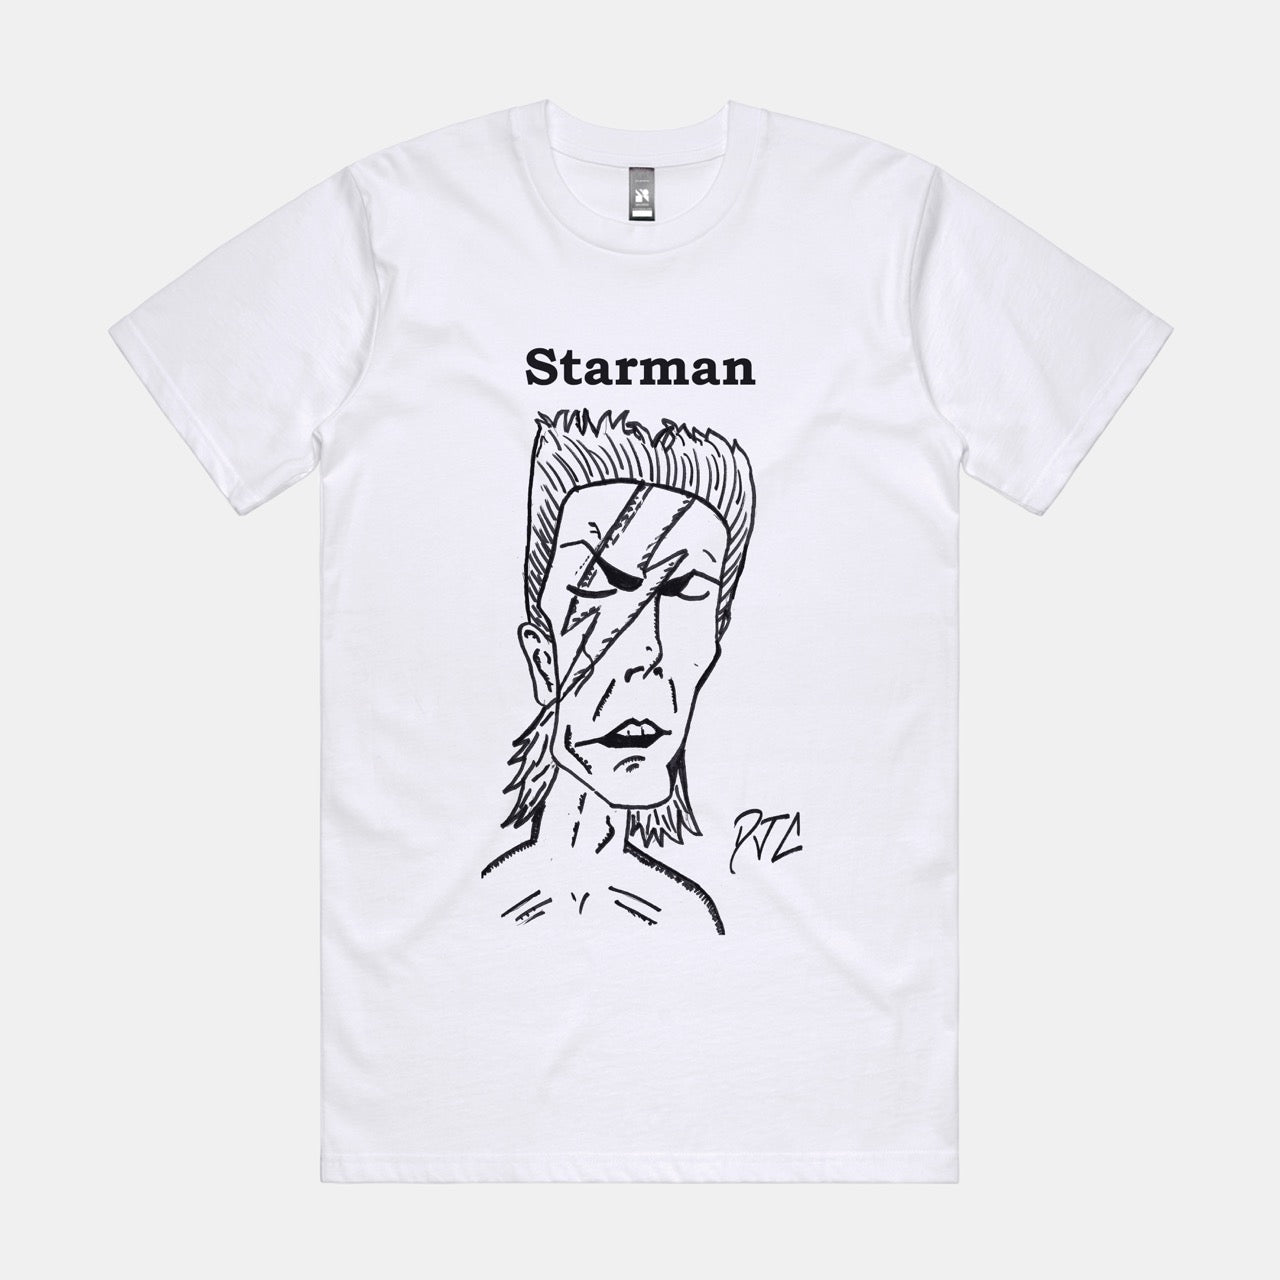 DJC - David Bowie Artwork - White T-shirt